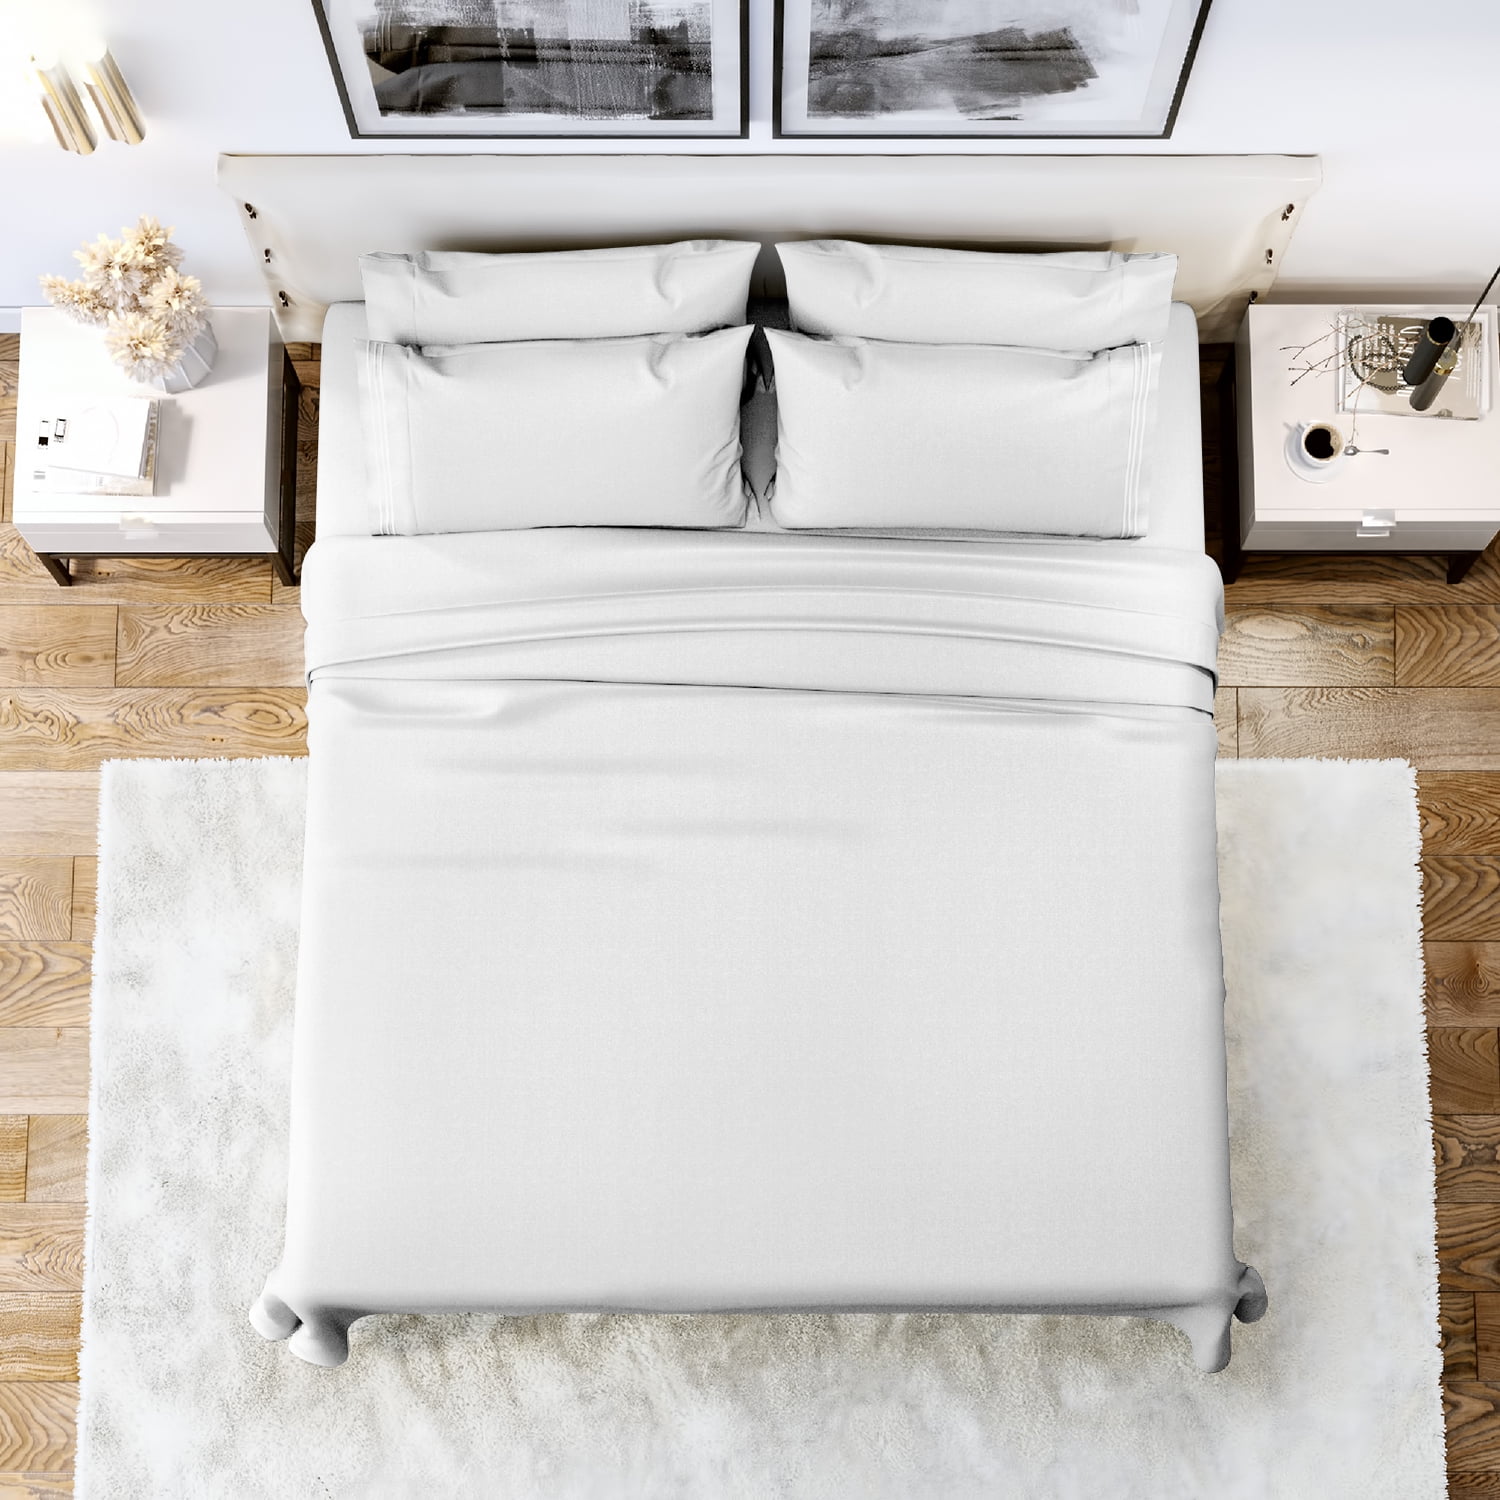 Bedding Set Linens Flat Fitted Sheet Pillowcase Queen King Size Soft 